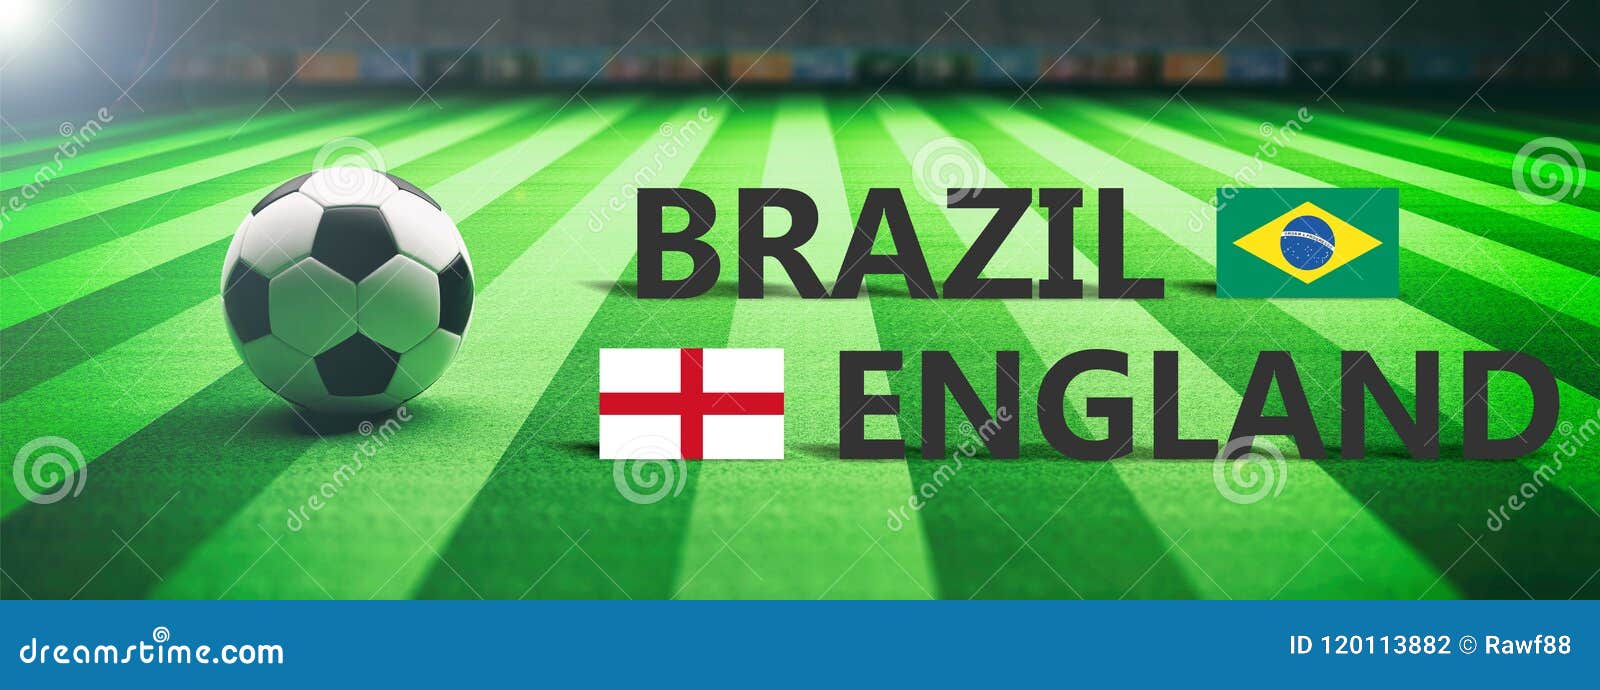 Soccer, Football Match, Brazil Vs England, 3d Illustration Stock